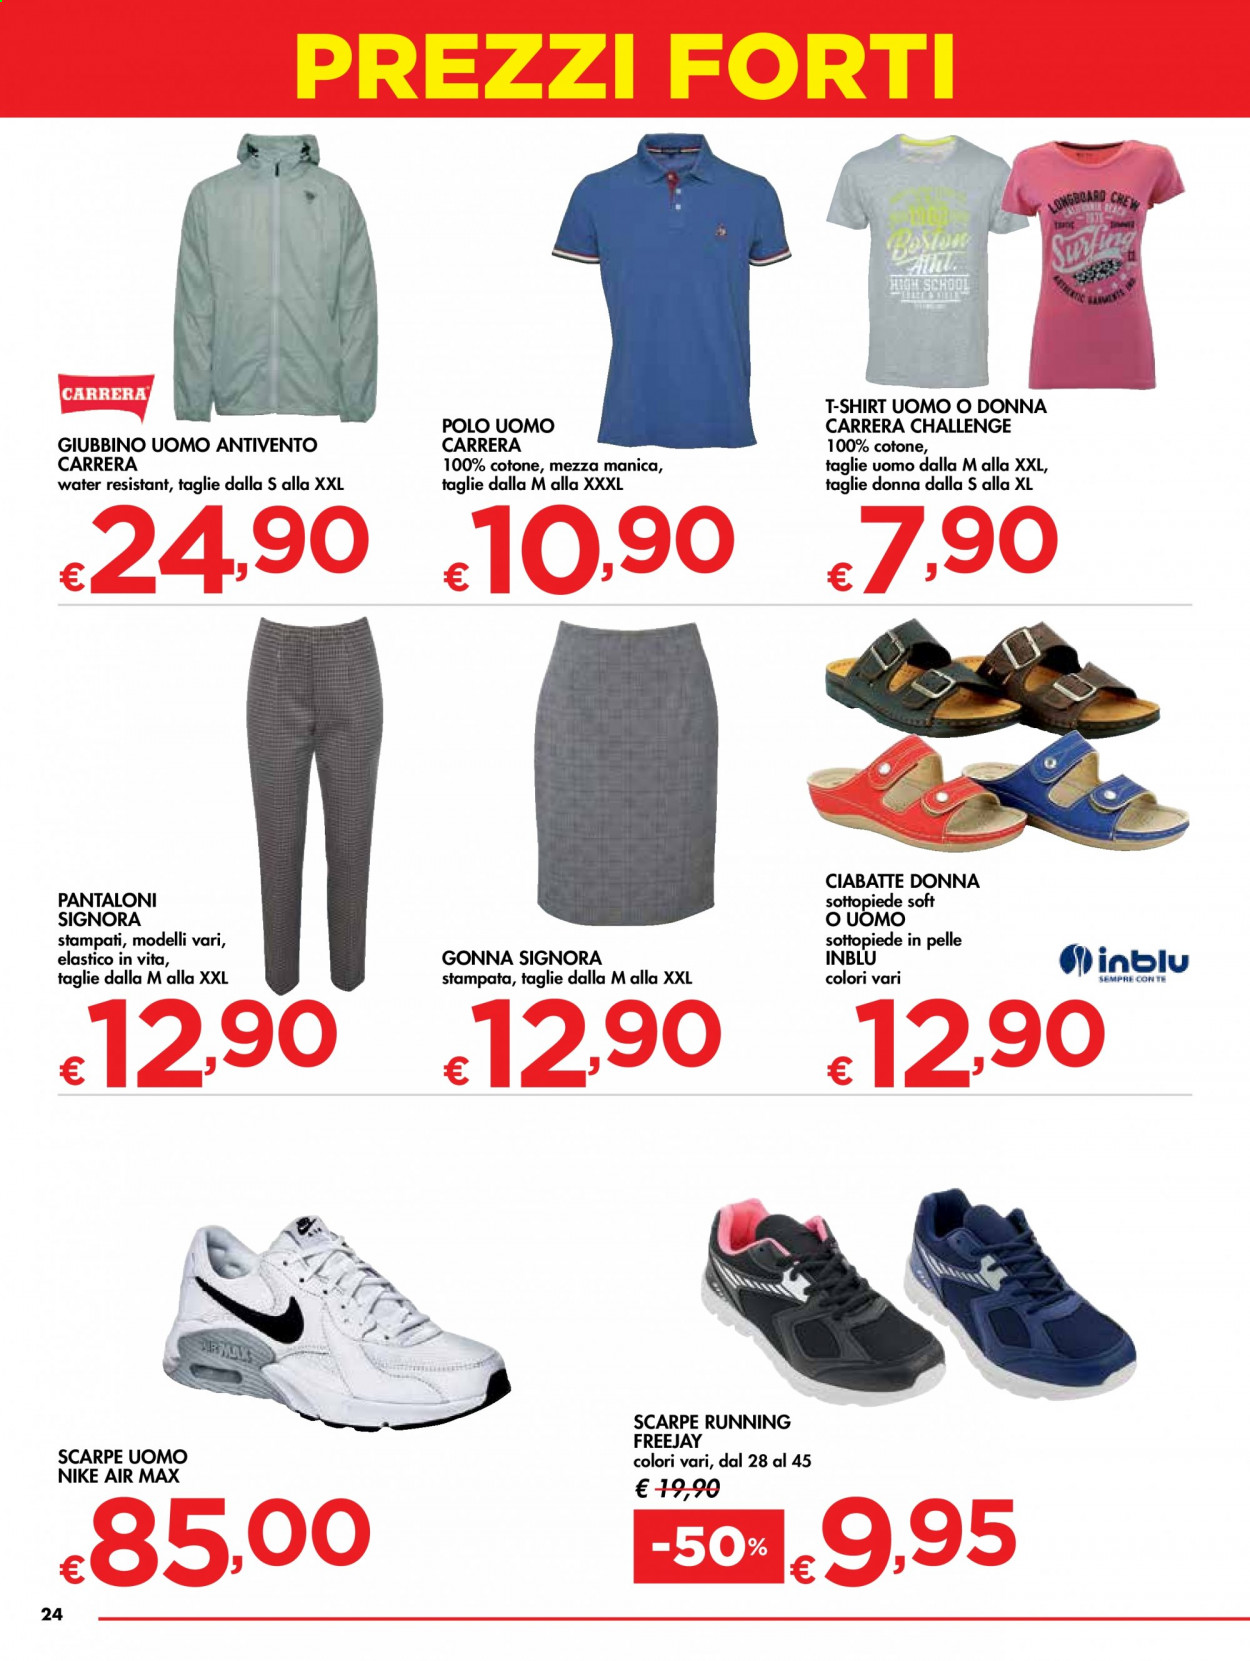 thumbnail - Volantino bennet - 25/2/2021 - 17/3/2021 - Prodotti in offerta - Carrera, Nike, scarpe, scarpe running, Air Max, pantaloni, gonna, t-shirt, polo golf, longboard. Pagina 24.